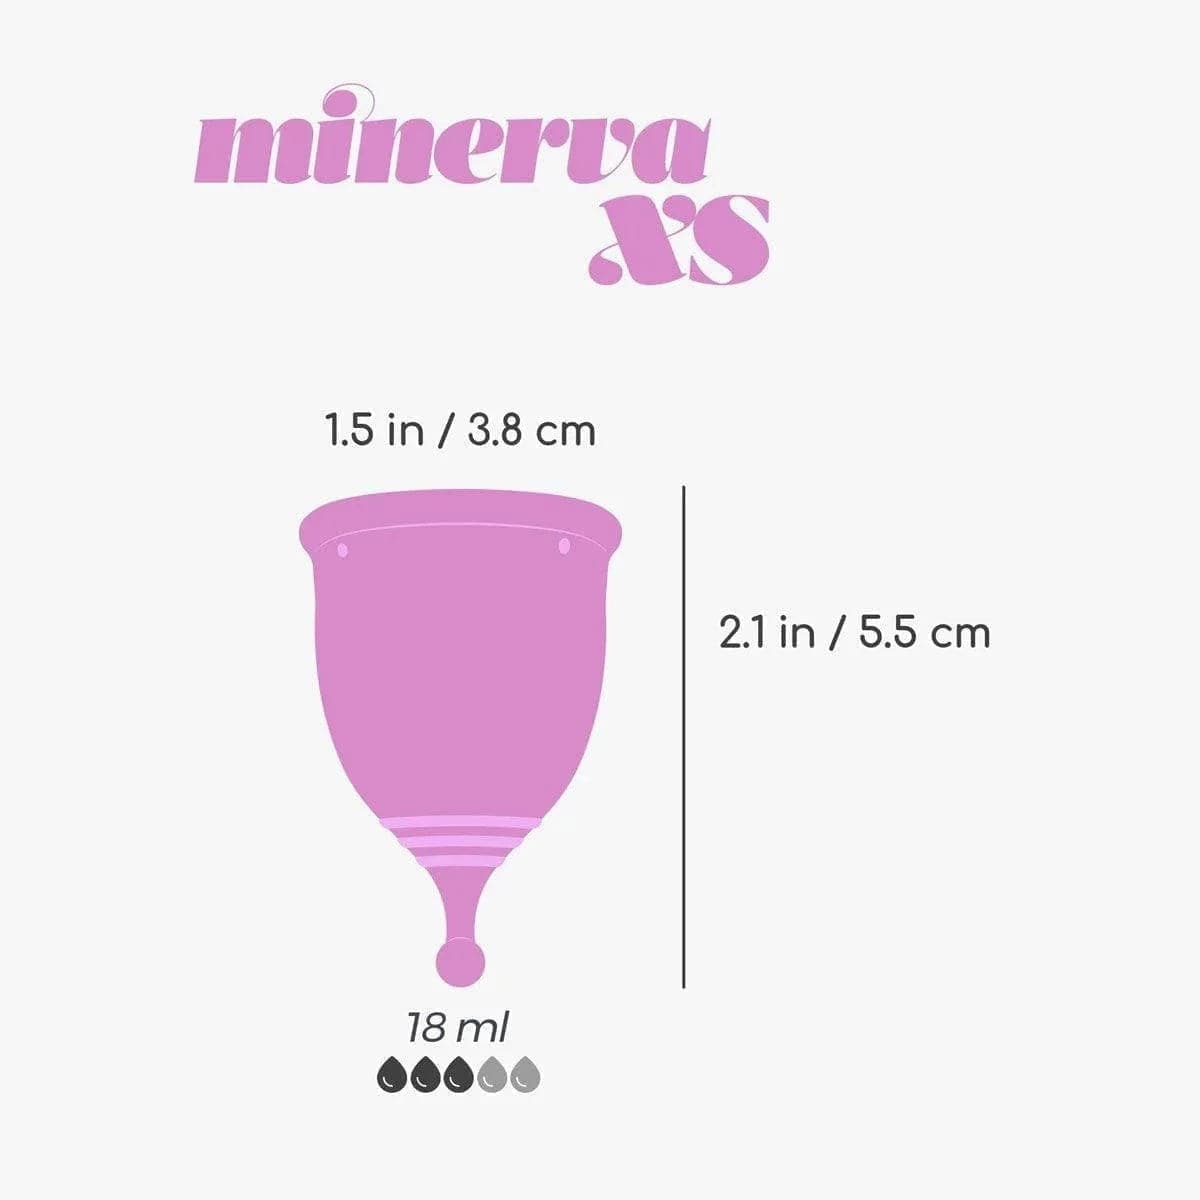 Copo Menstrual Minerva XS 100% Silicone, 18ml, 5.5cm Ø3.8cm  Crushious   